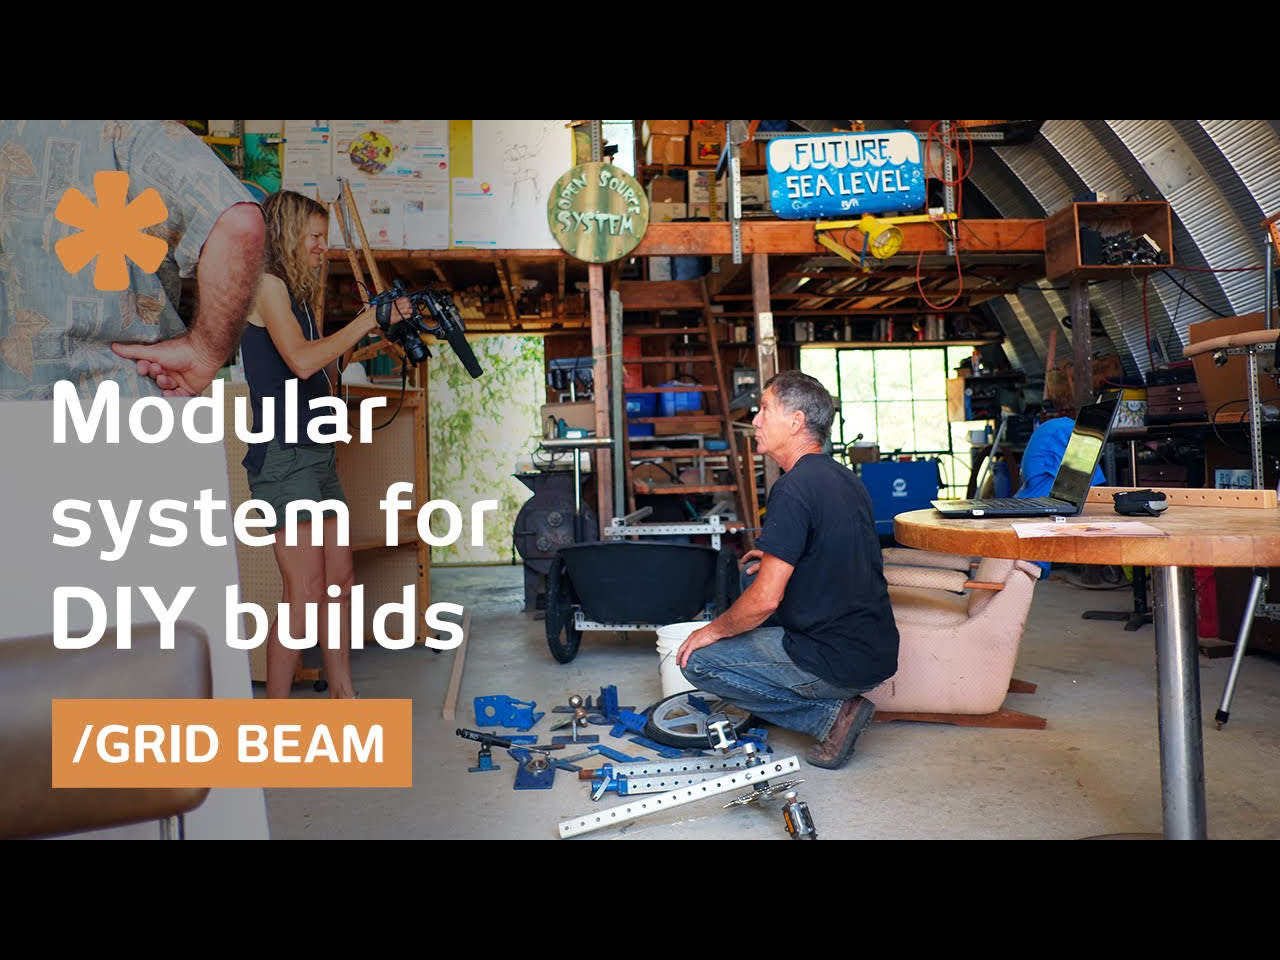 Modular system for DIY builds